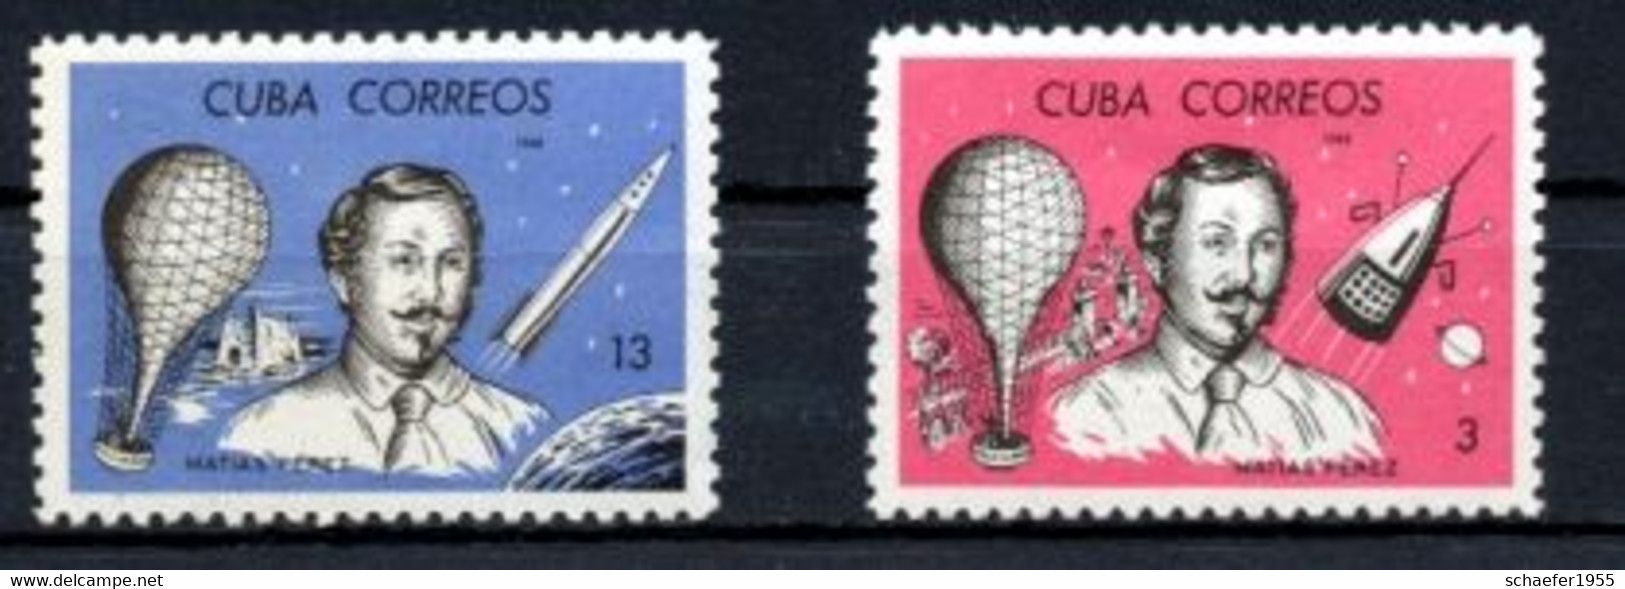 Cuba, Kuba 1965 FDC + Stamps Pioneros Del Aire - Nordamerika